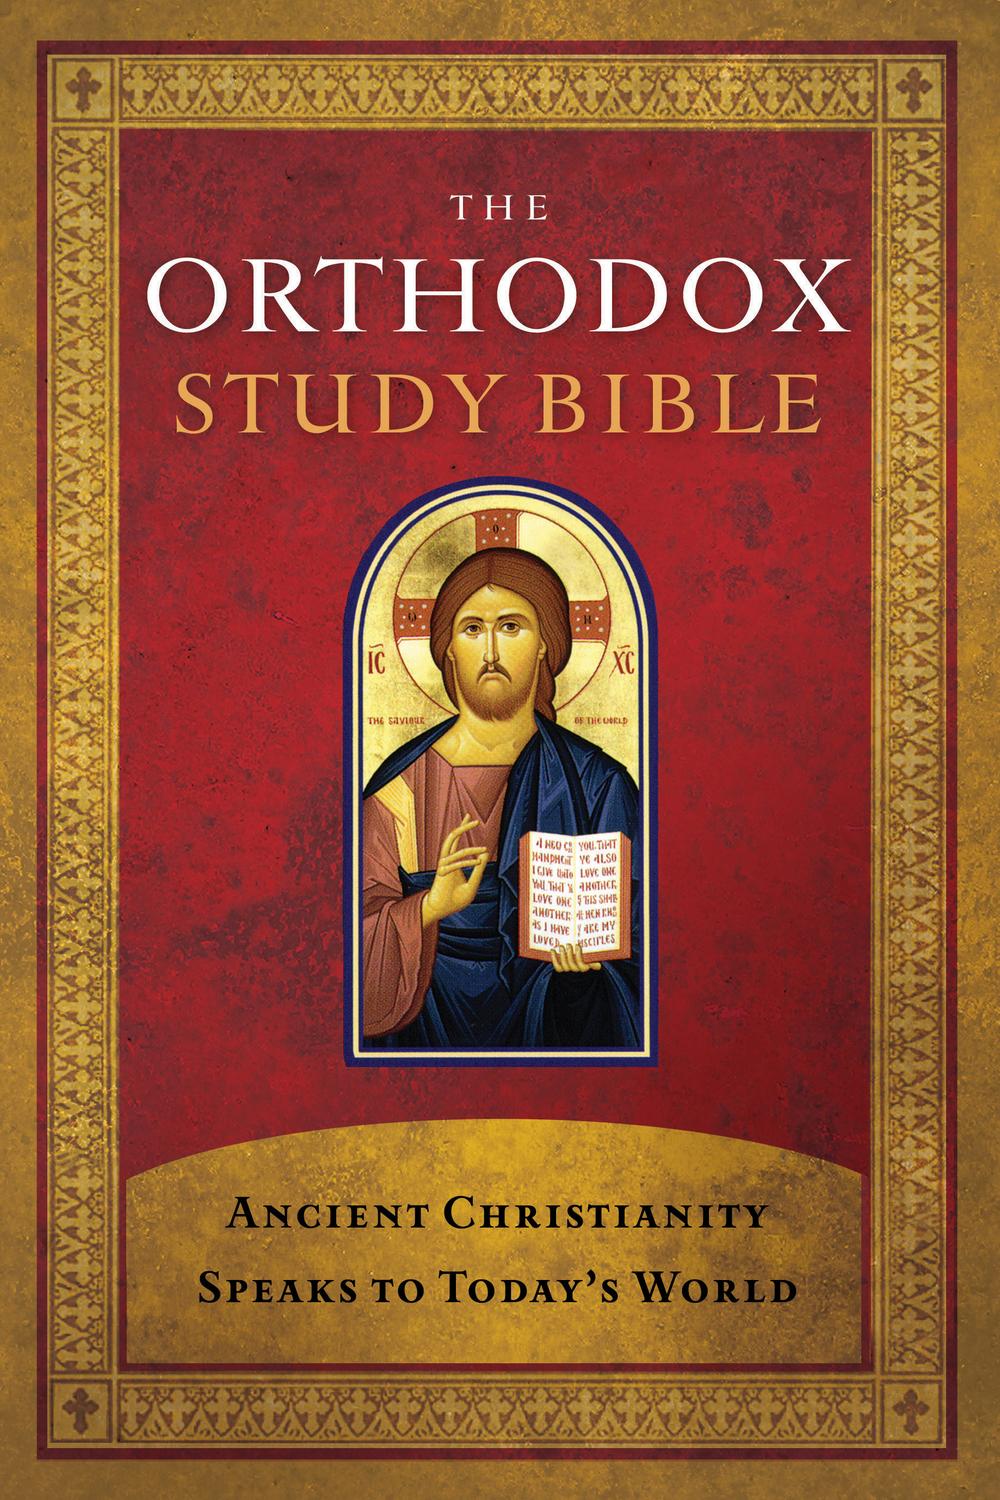 The Orthodox Study Bible - Thomas Nelson